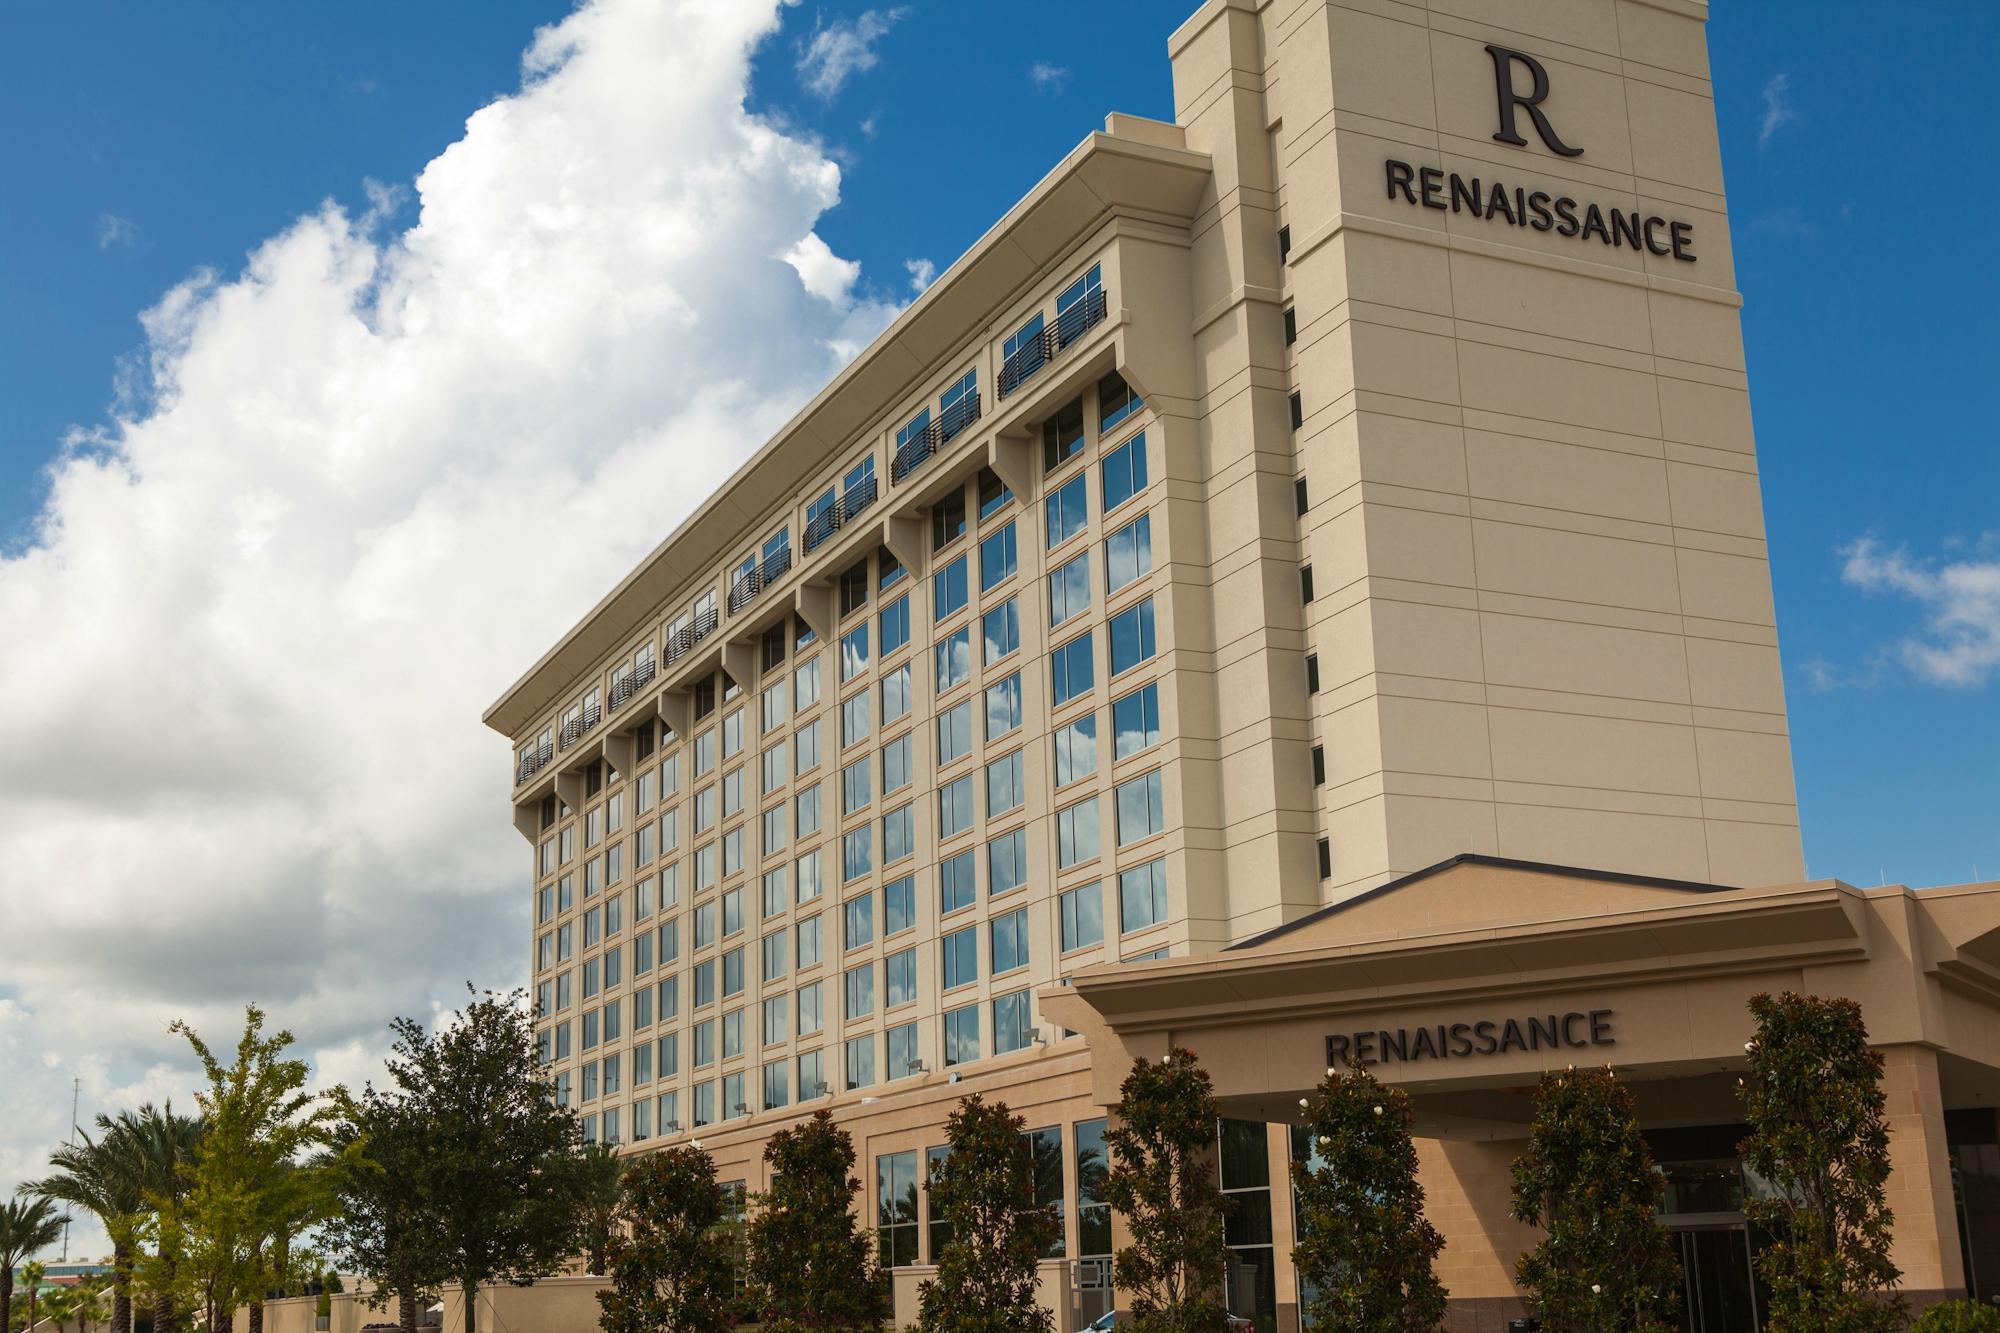 Photo of Renaissance Baton Rouge Hotel, Baton Rouge, LA